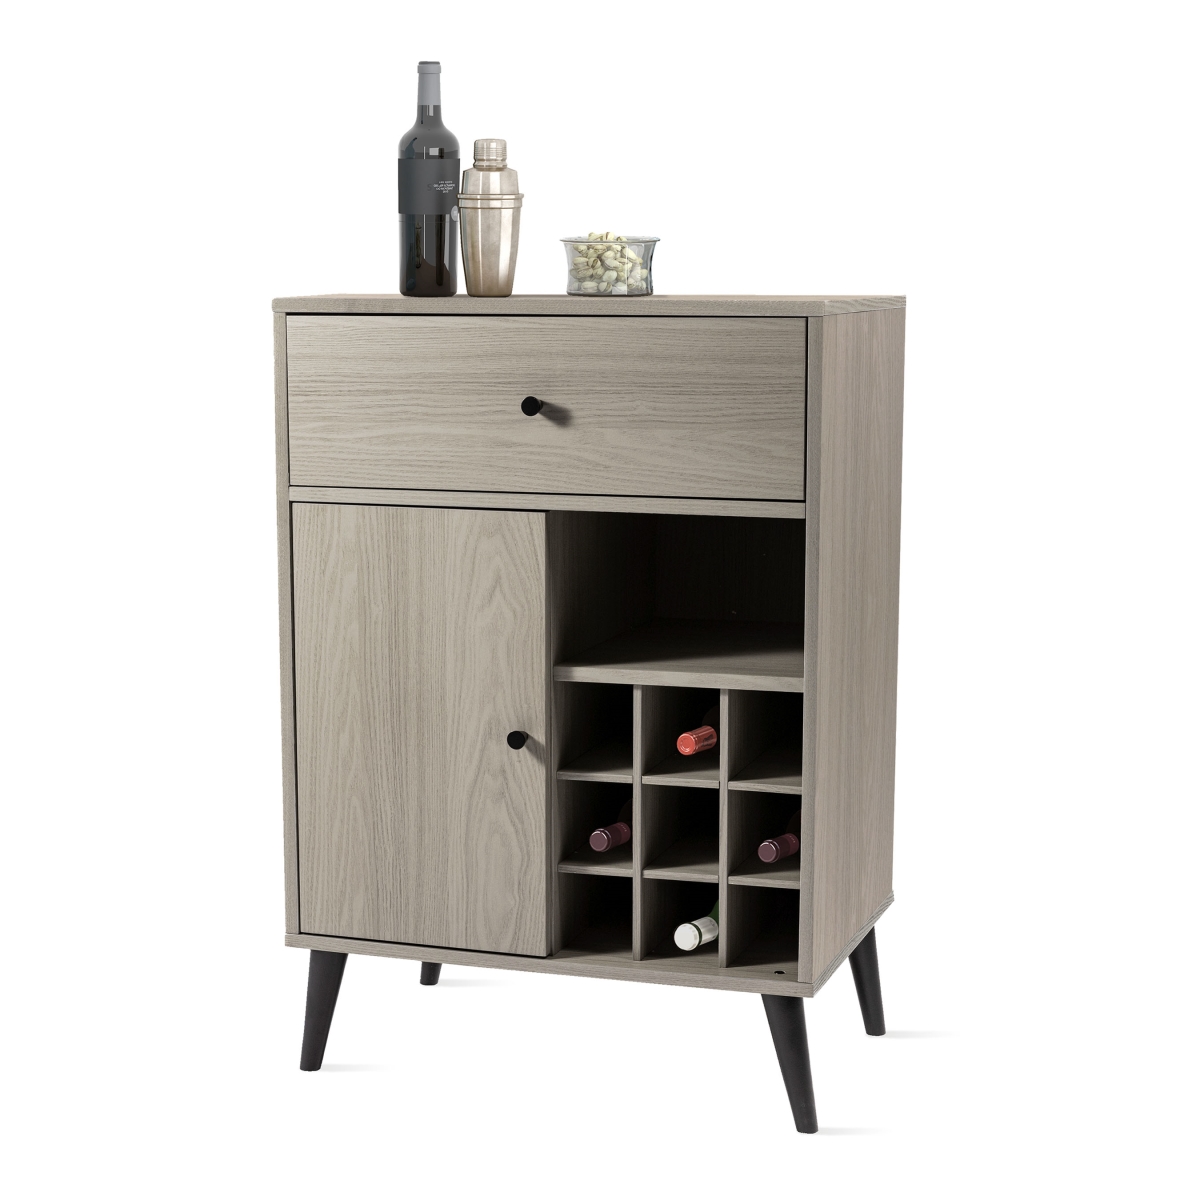 Picture of Atlantic 38408175 Atlantic Emmett Wine Cabinet in Modern Light Grey